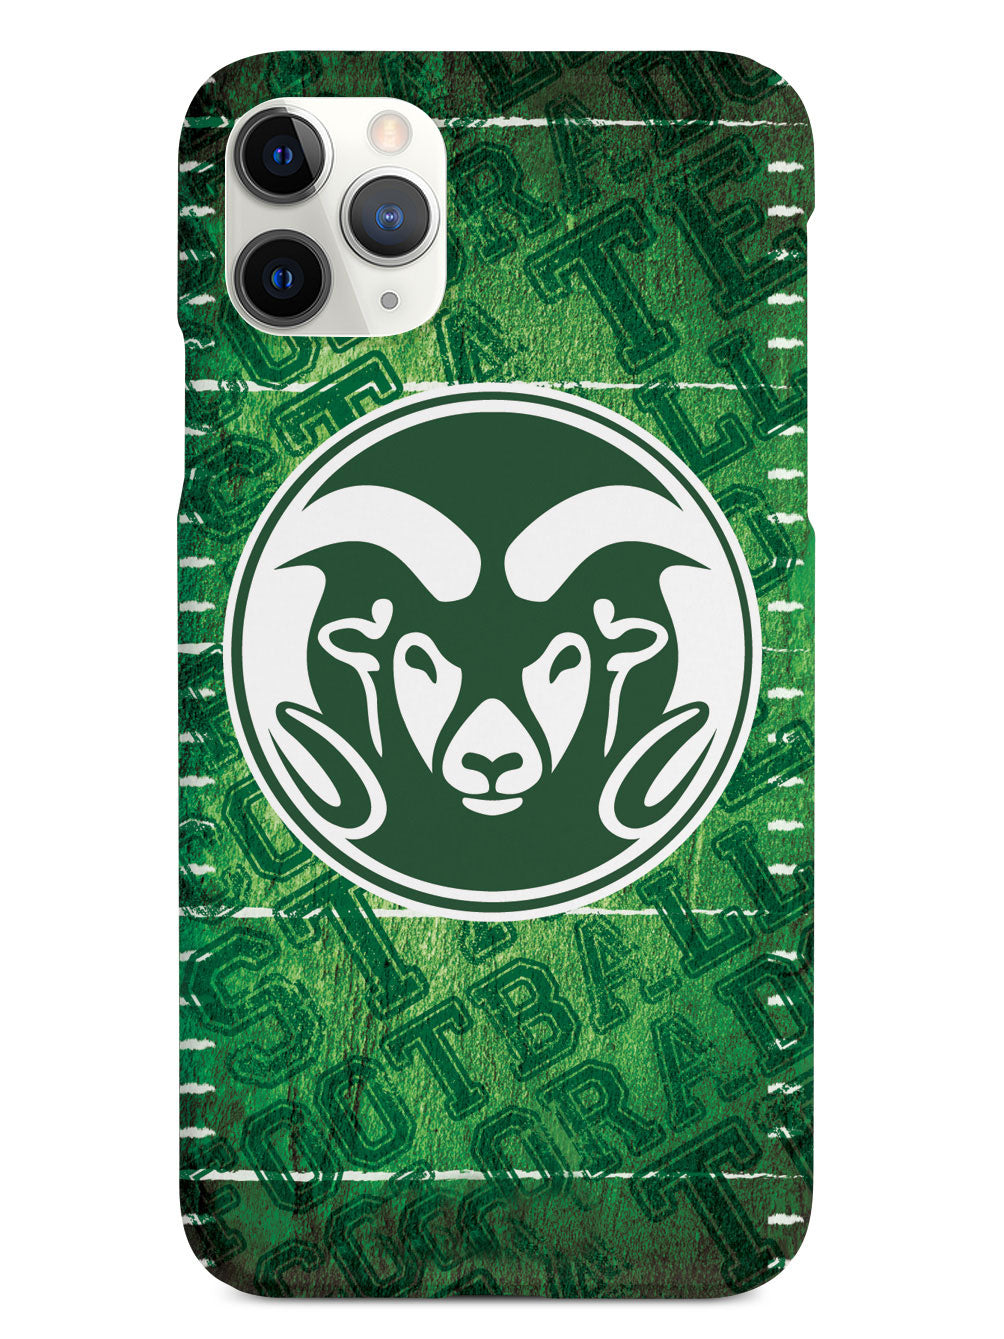 Colorado State University Rams - Football Case